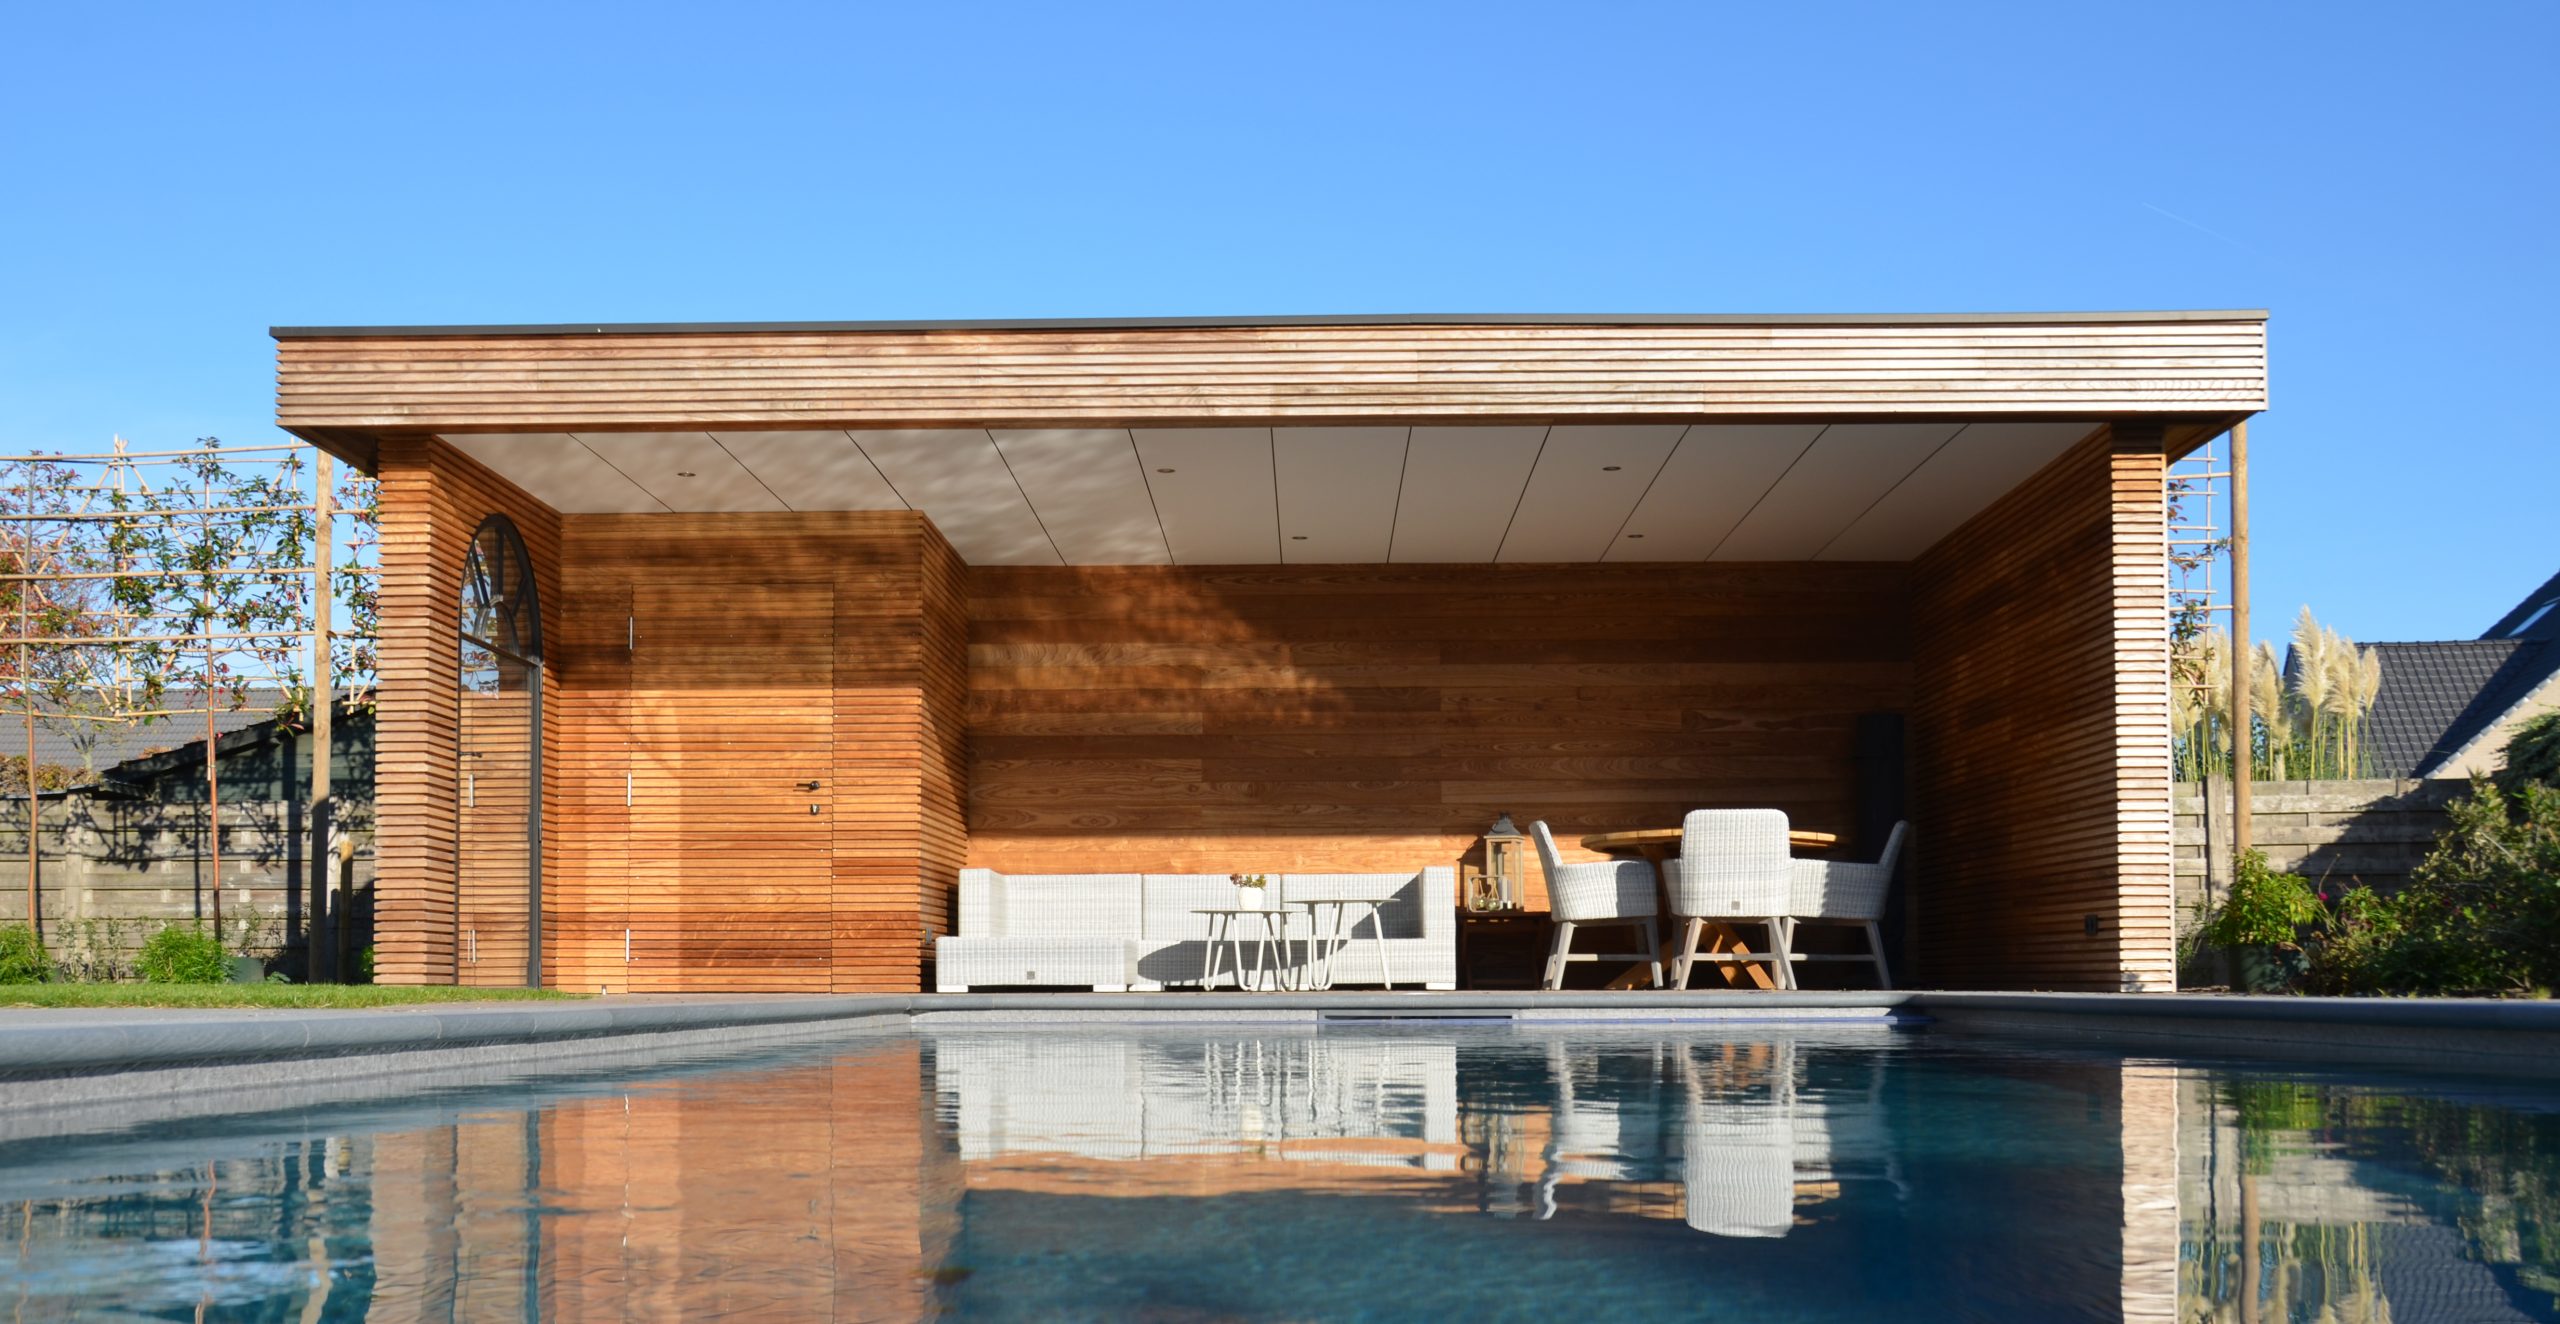 Kopelino moderne realisatie poolhouse in hout